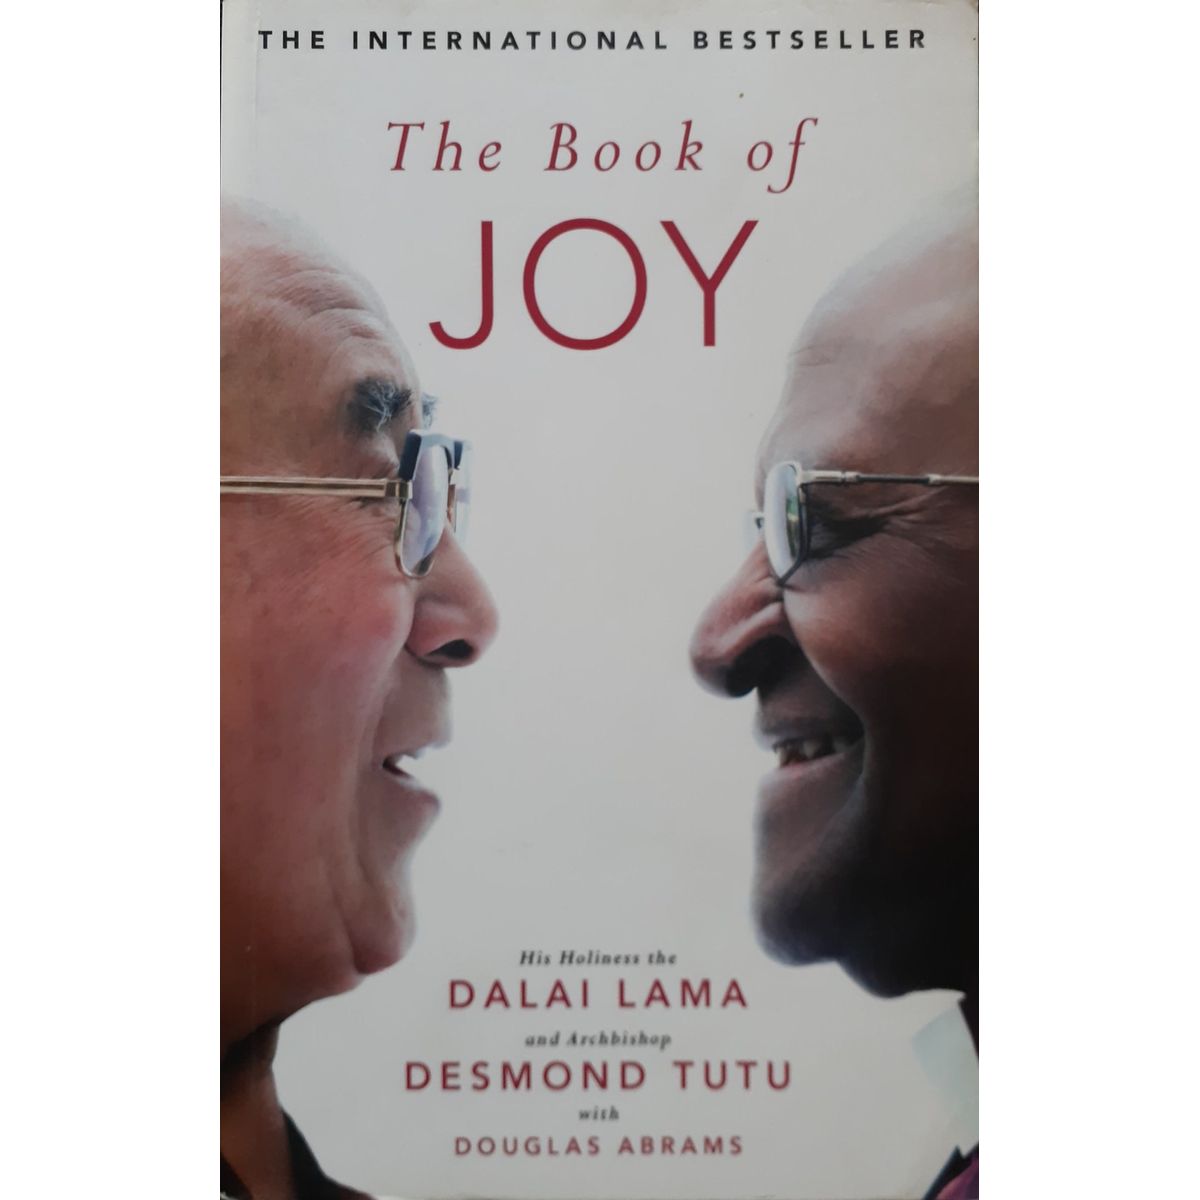 ISBN: 9781784756291 / 1784756296 - The Book of Joy by Dalai Lama, Desmond Tutu & Douglas Abrams [2018]